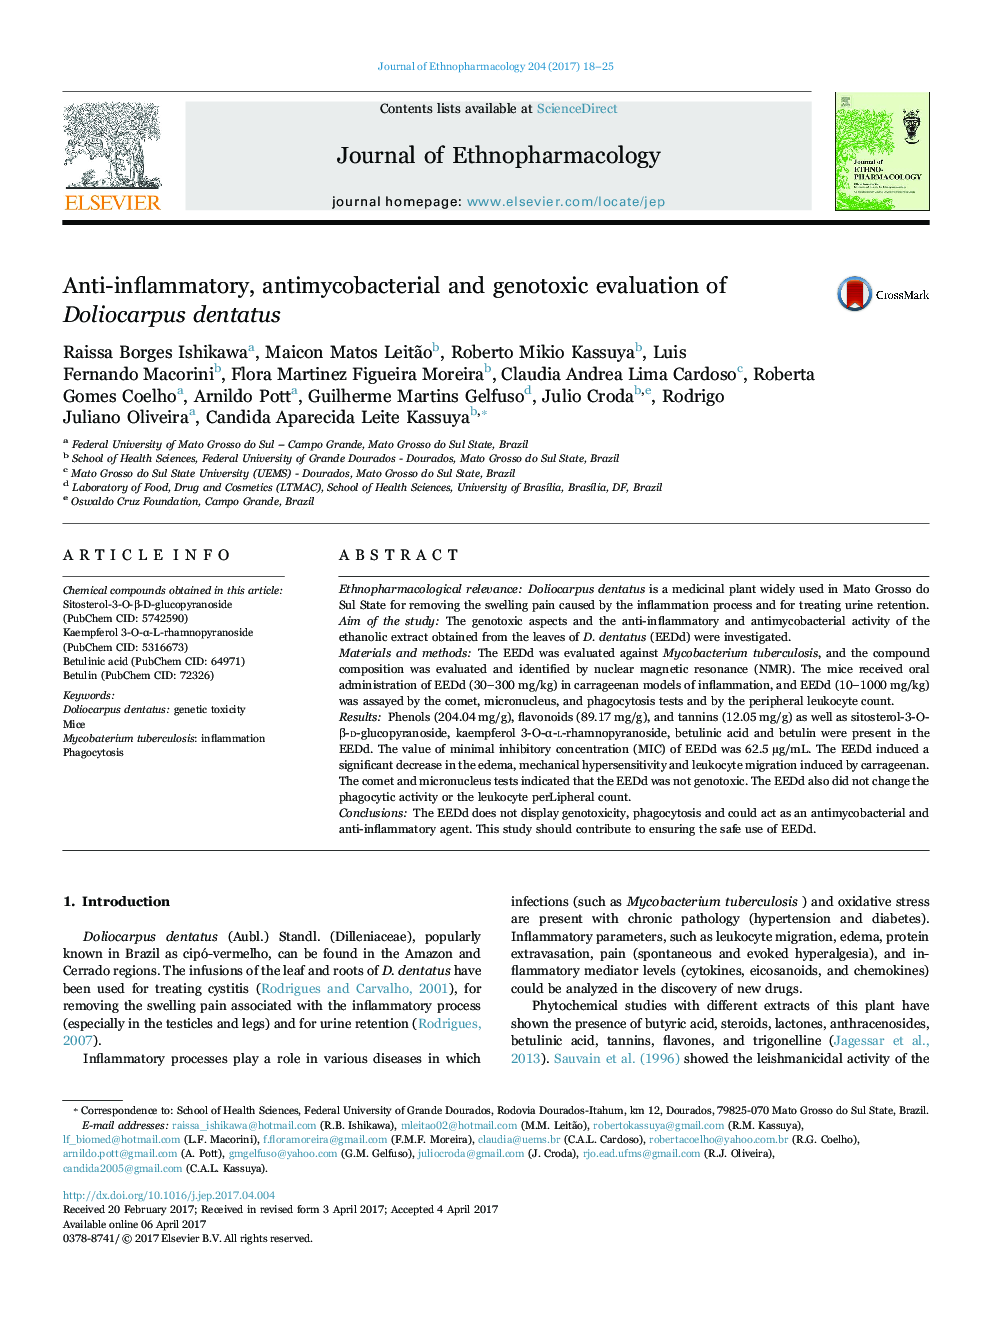 Anti-inflammatory, antimycobacterial and genotoxic evaluation of Doliocarpus dentatus